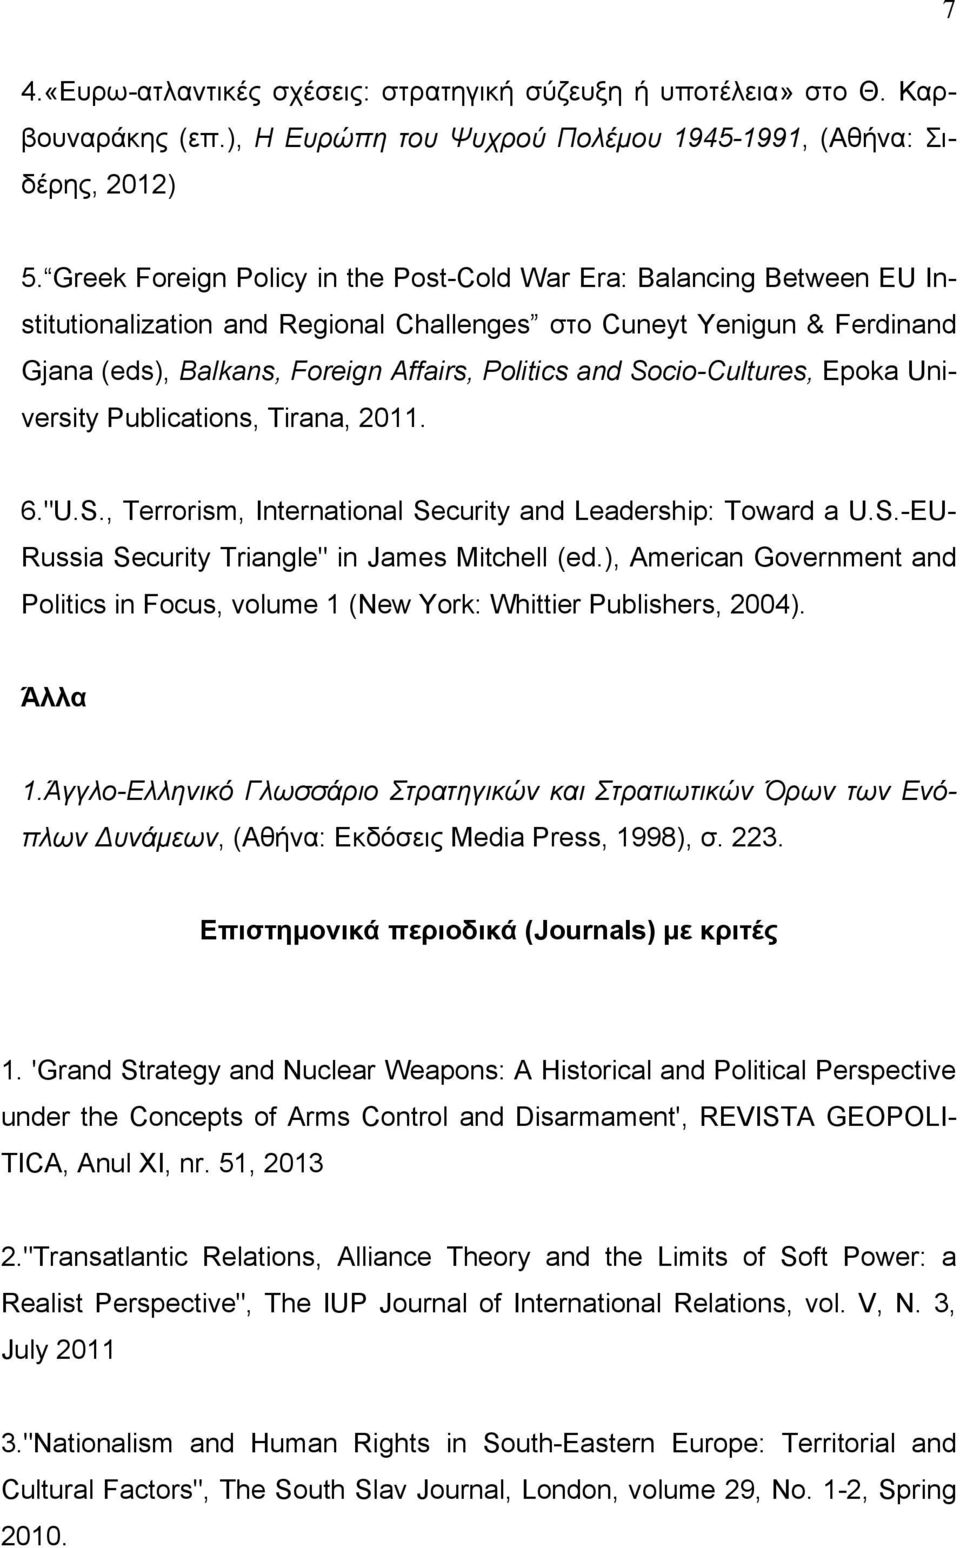 Socio-Cultures, Epoka University Publications, Tirana, 2011. 6."U.S., Terrorism, International Security and Leadership: Toward a U.S.-EU- Russia Security Triangle" in James Mitchell (ed.